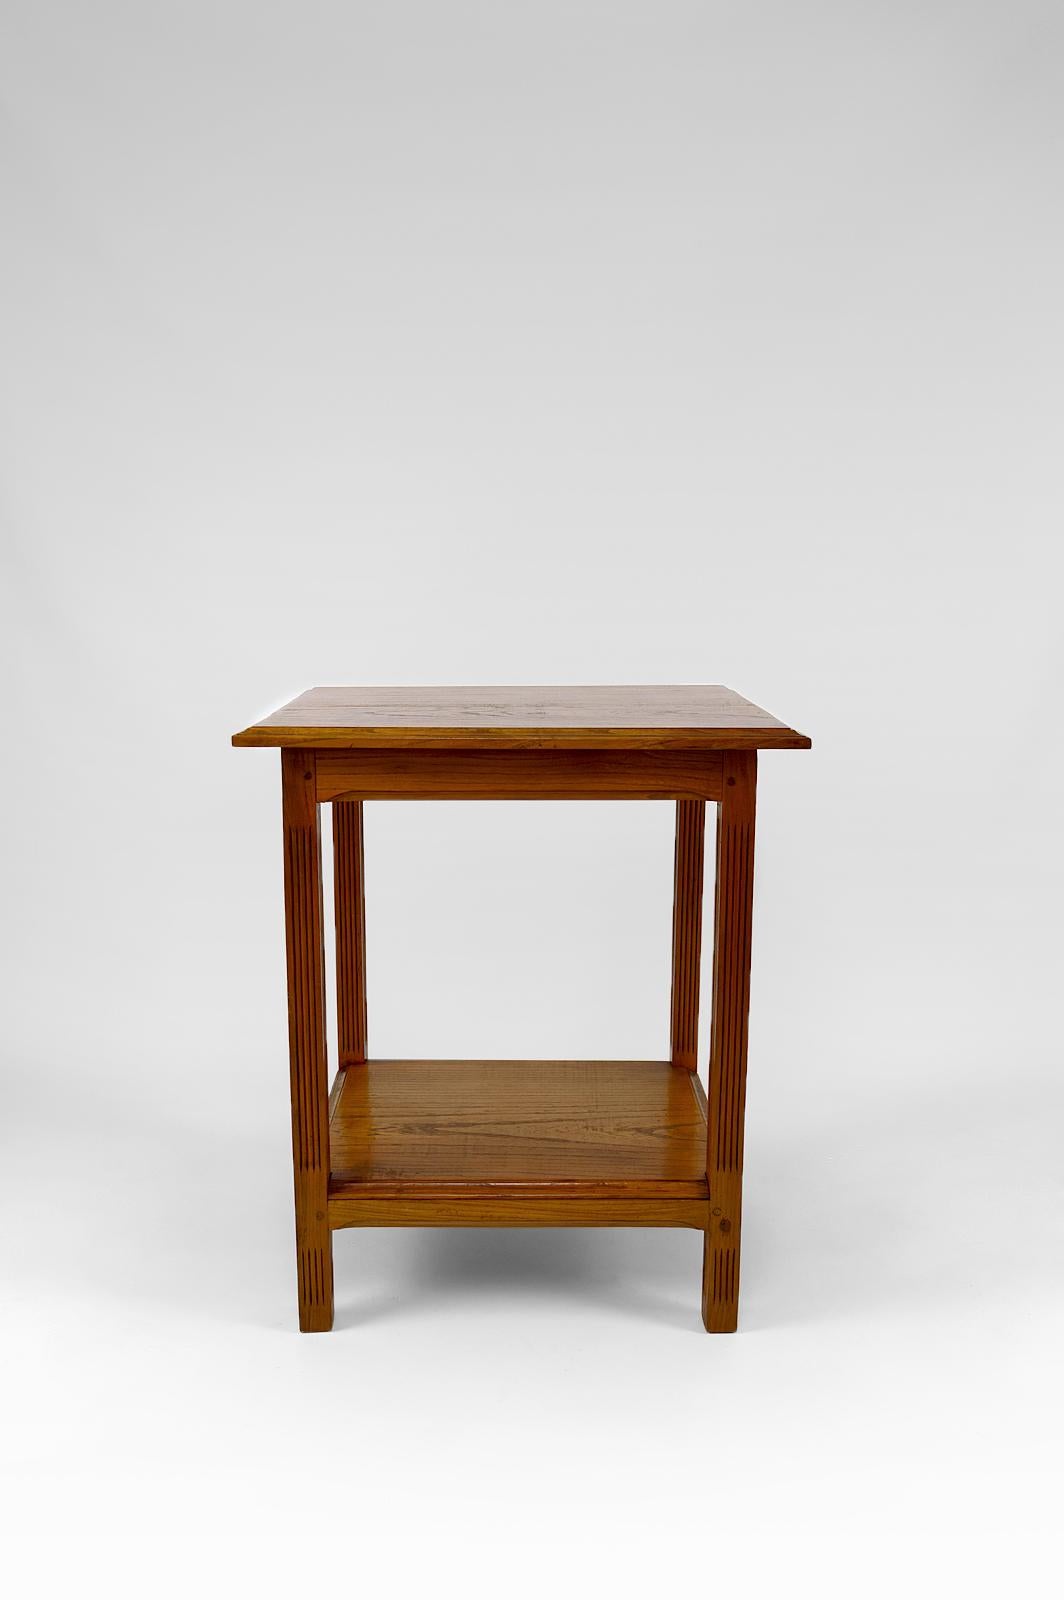 
Beautiful oak serving table / side table / gueridon.
Art Nouveau.
France, Circa 1910-1920
In good condition.

Dimensions:
height 78 cm (20 cm lower shelf)
width 54 cm
depth 67 cm

